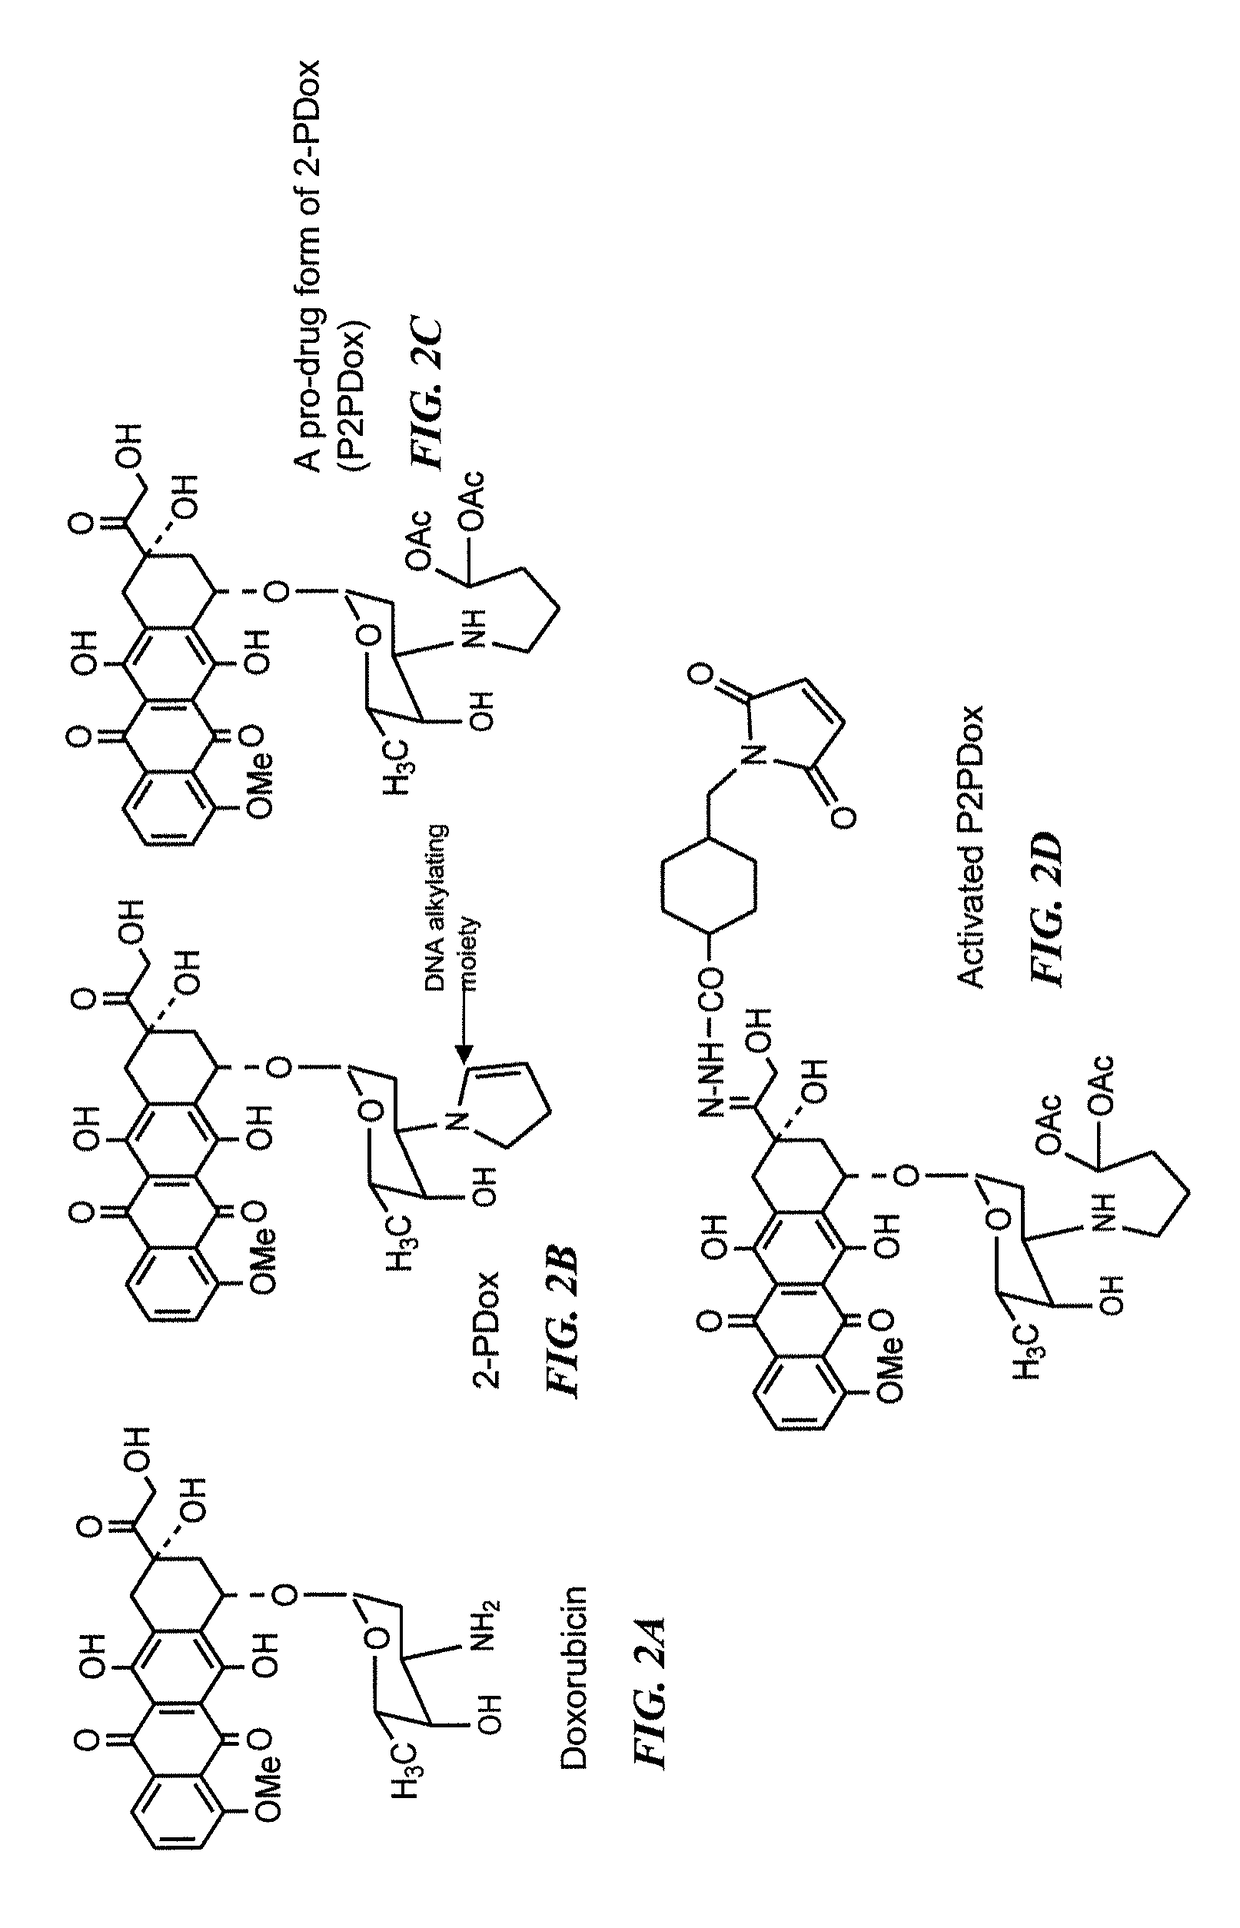 Neoadjuvant use of antibody-drug conjugates